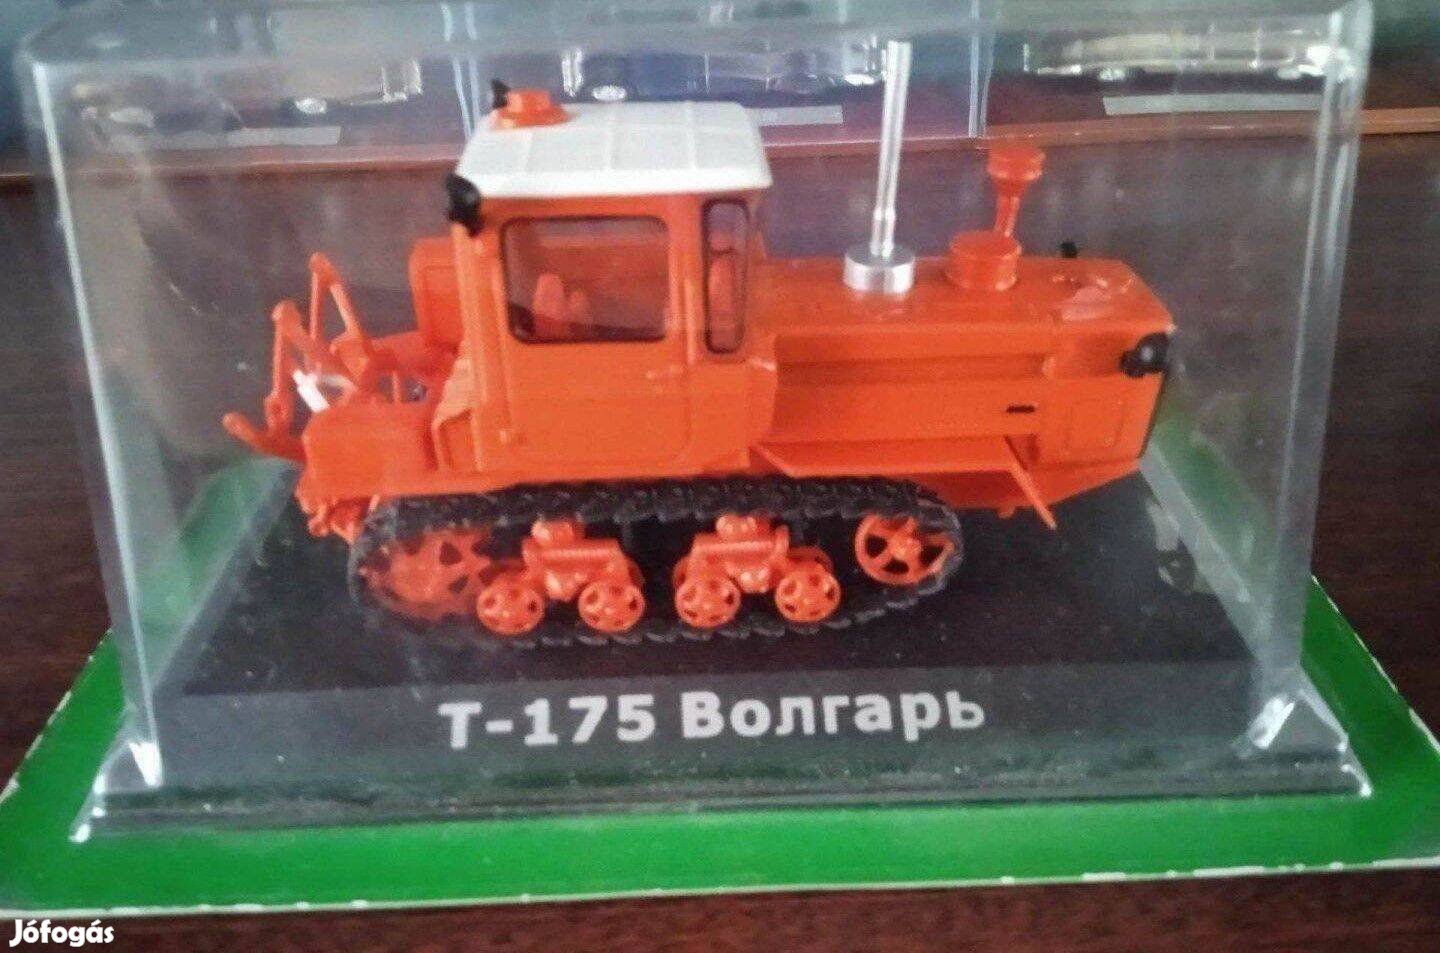 T 175 traktor kisauto modell 1/43 Eladó